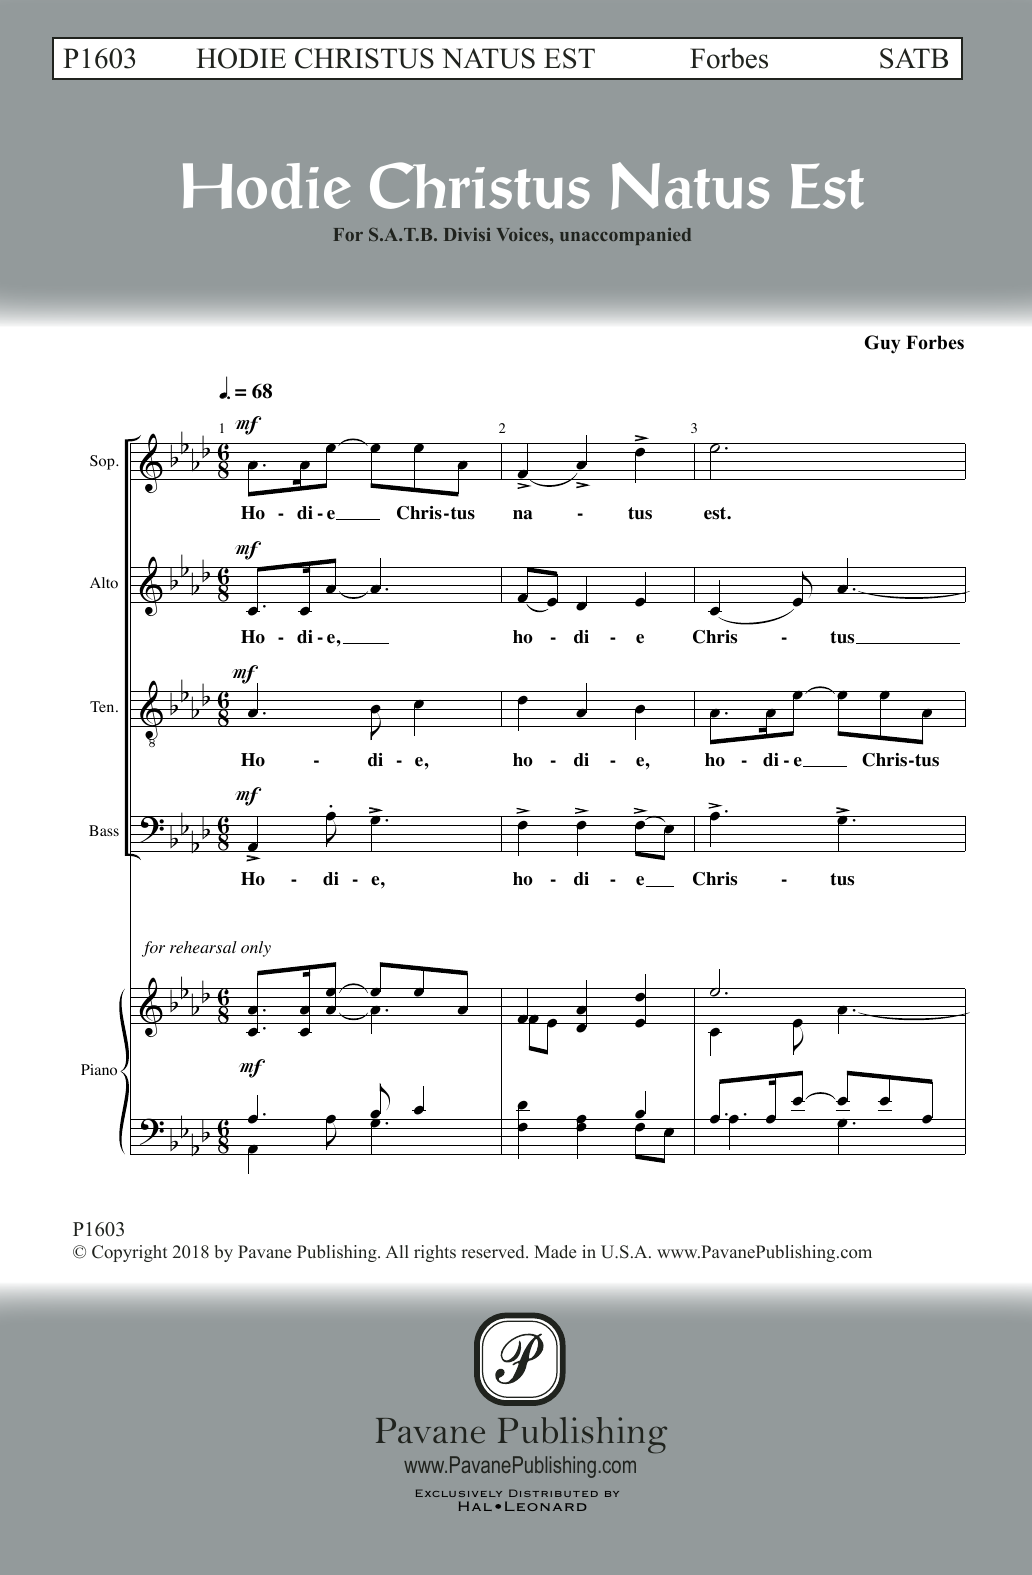 Guy Forbes Hodie Christus Natus Est Sheet Music Notes & Chords for SATB Choir - Download or Print PDF